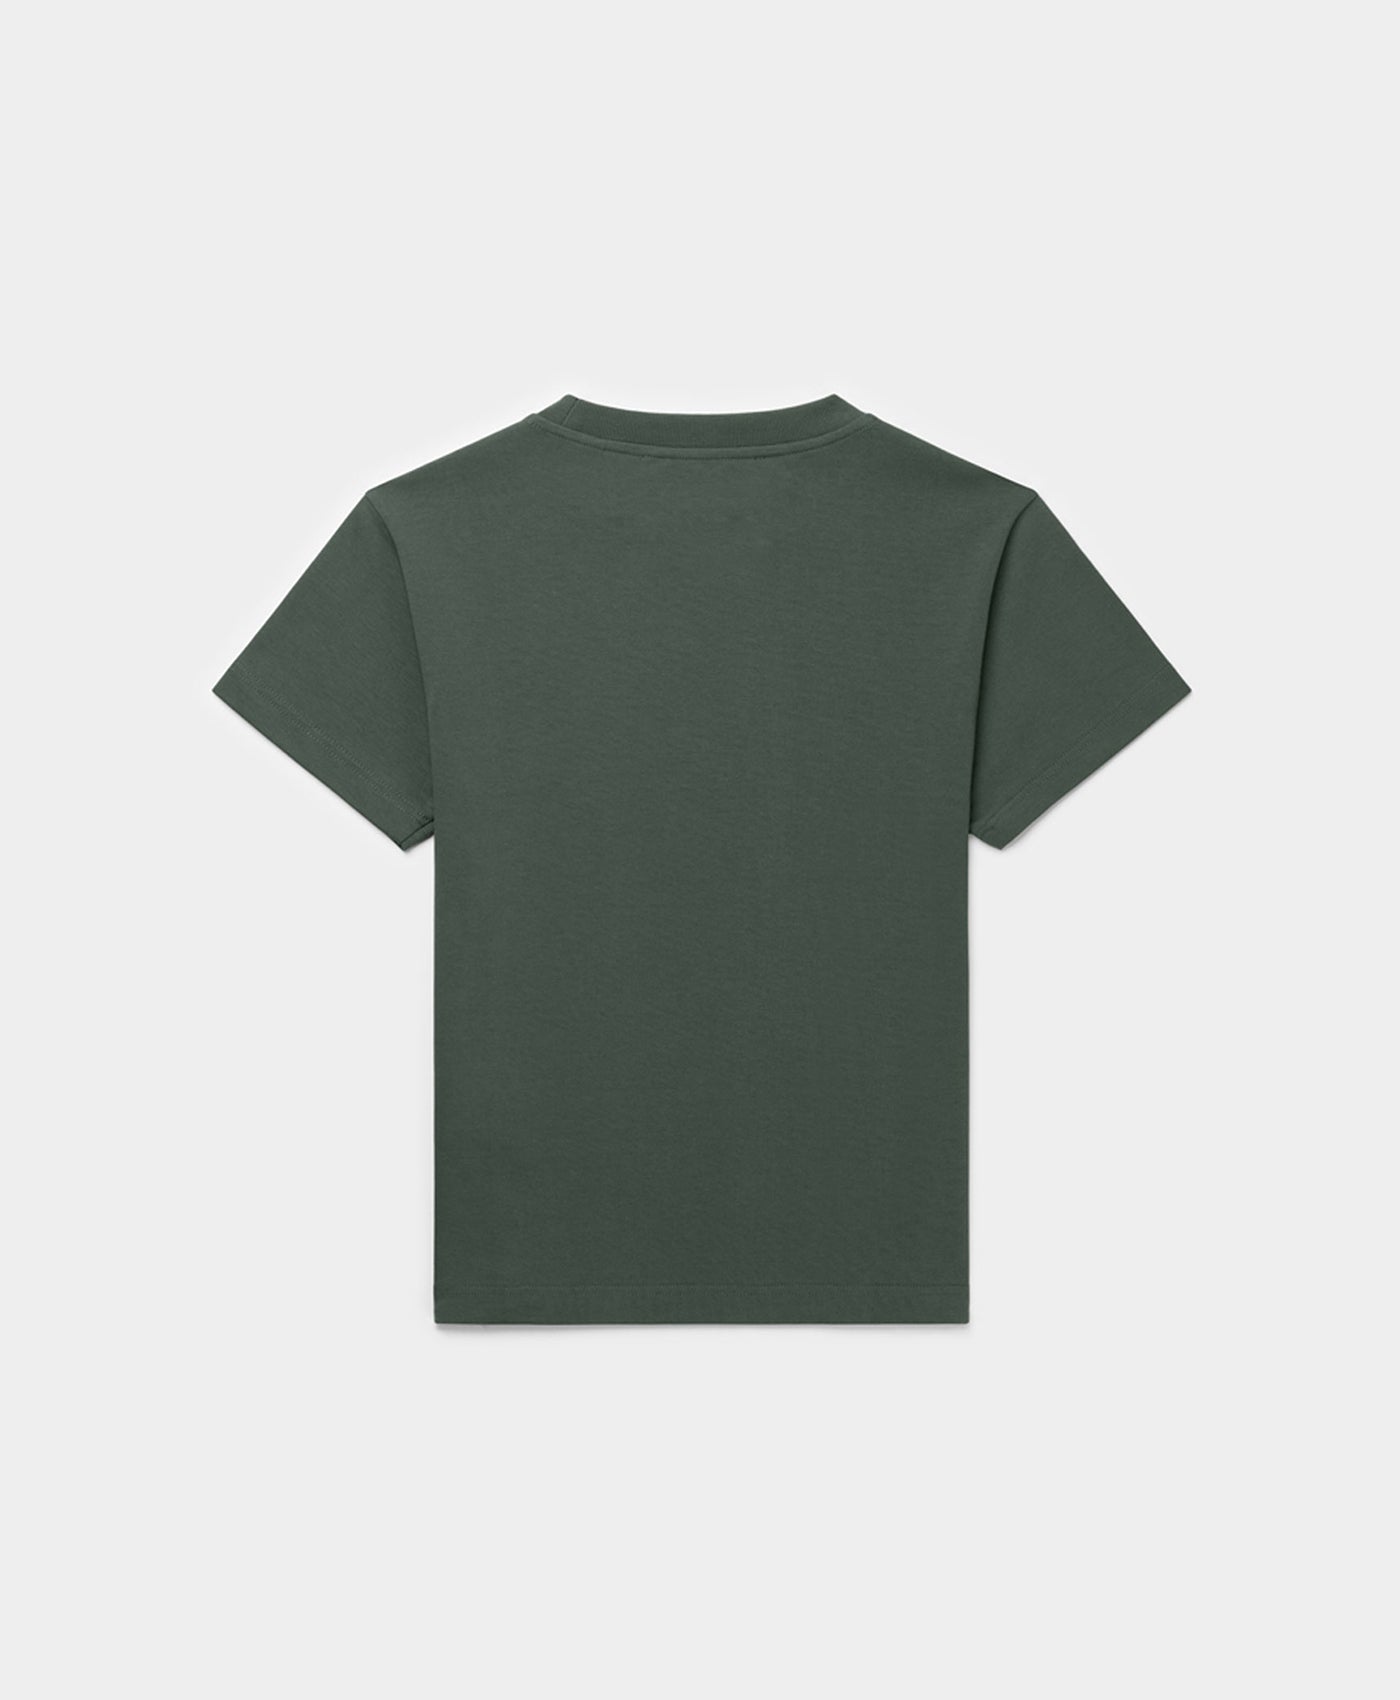 DP - Chic Green Estan Youth T-Shirt - Packshot - Rear